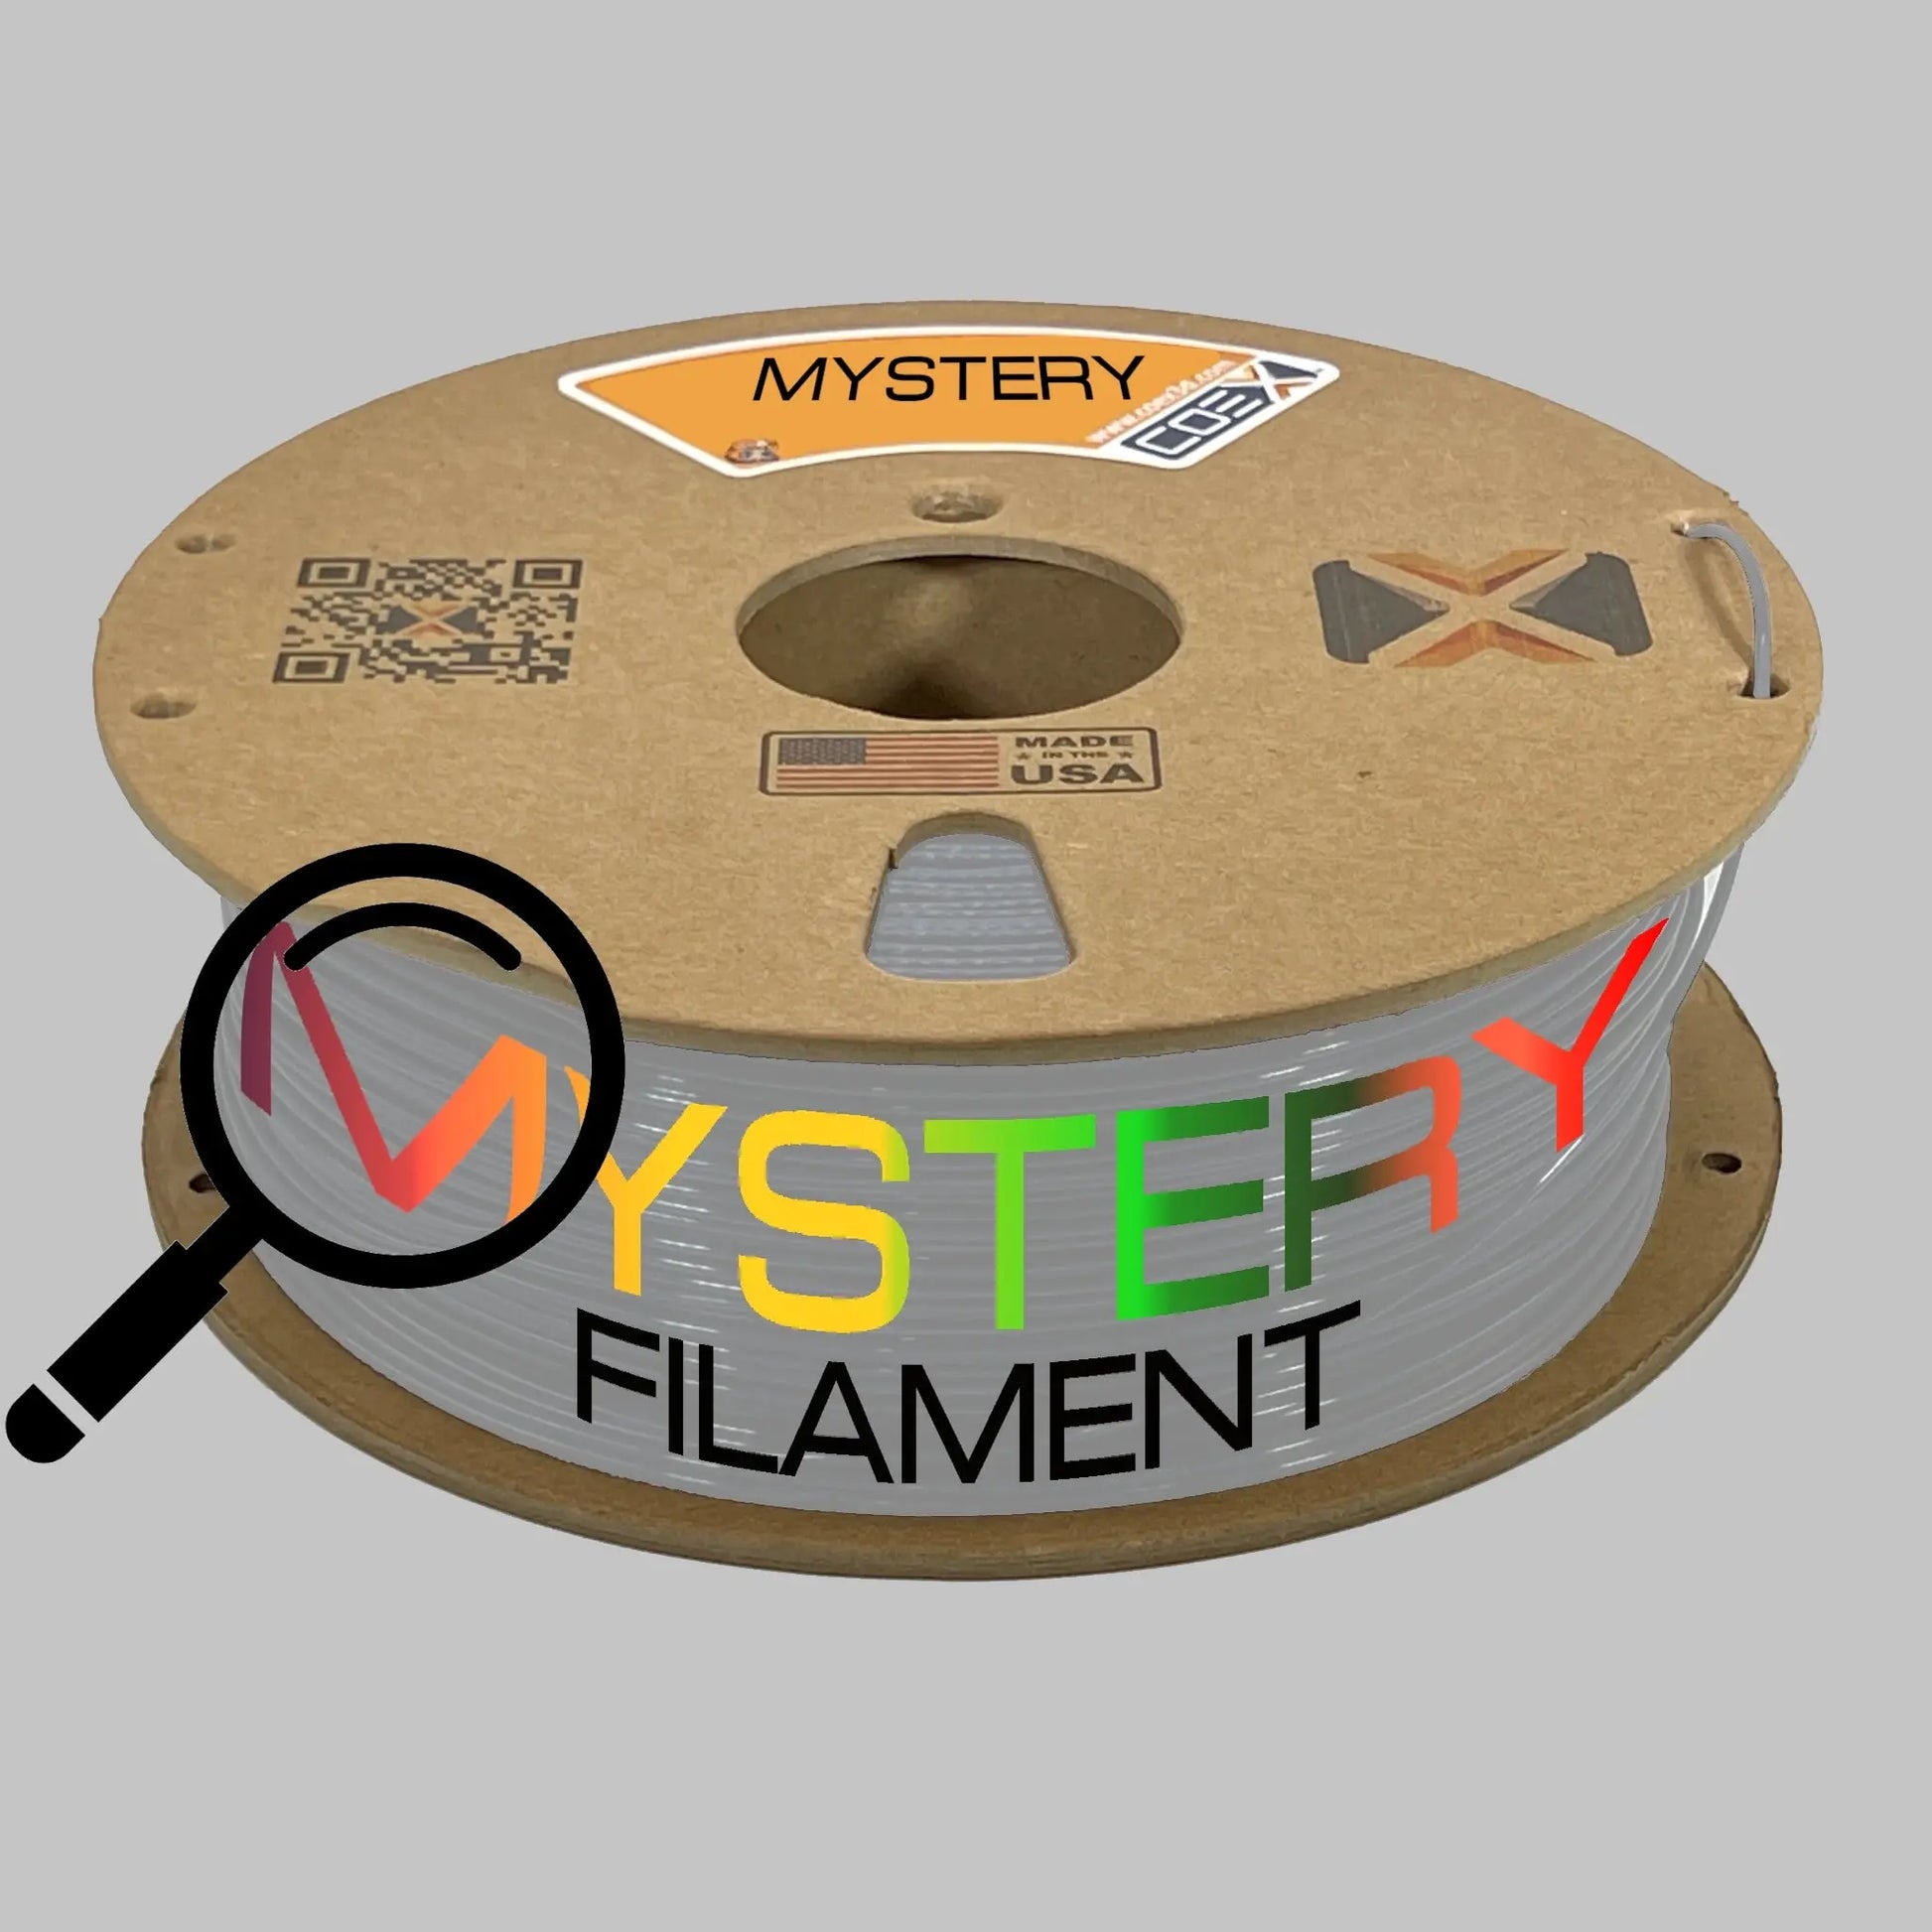 Transition “Mystery” Color PLA Prime coex3d